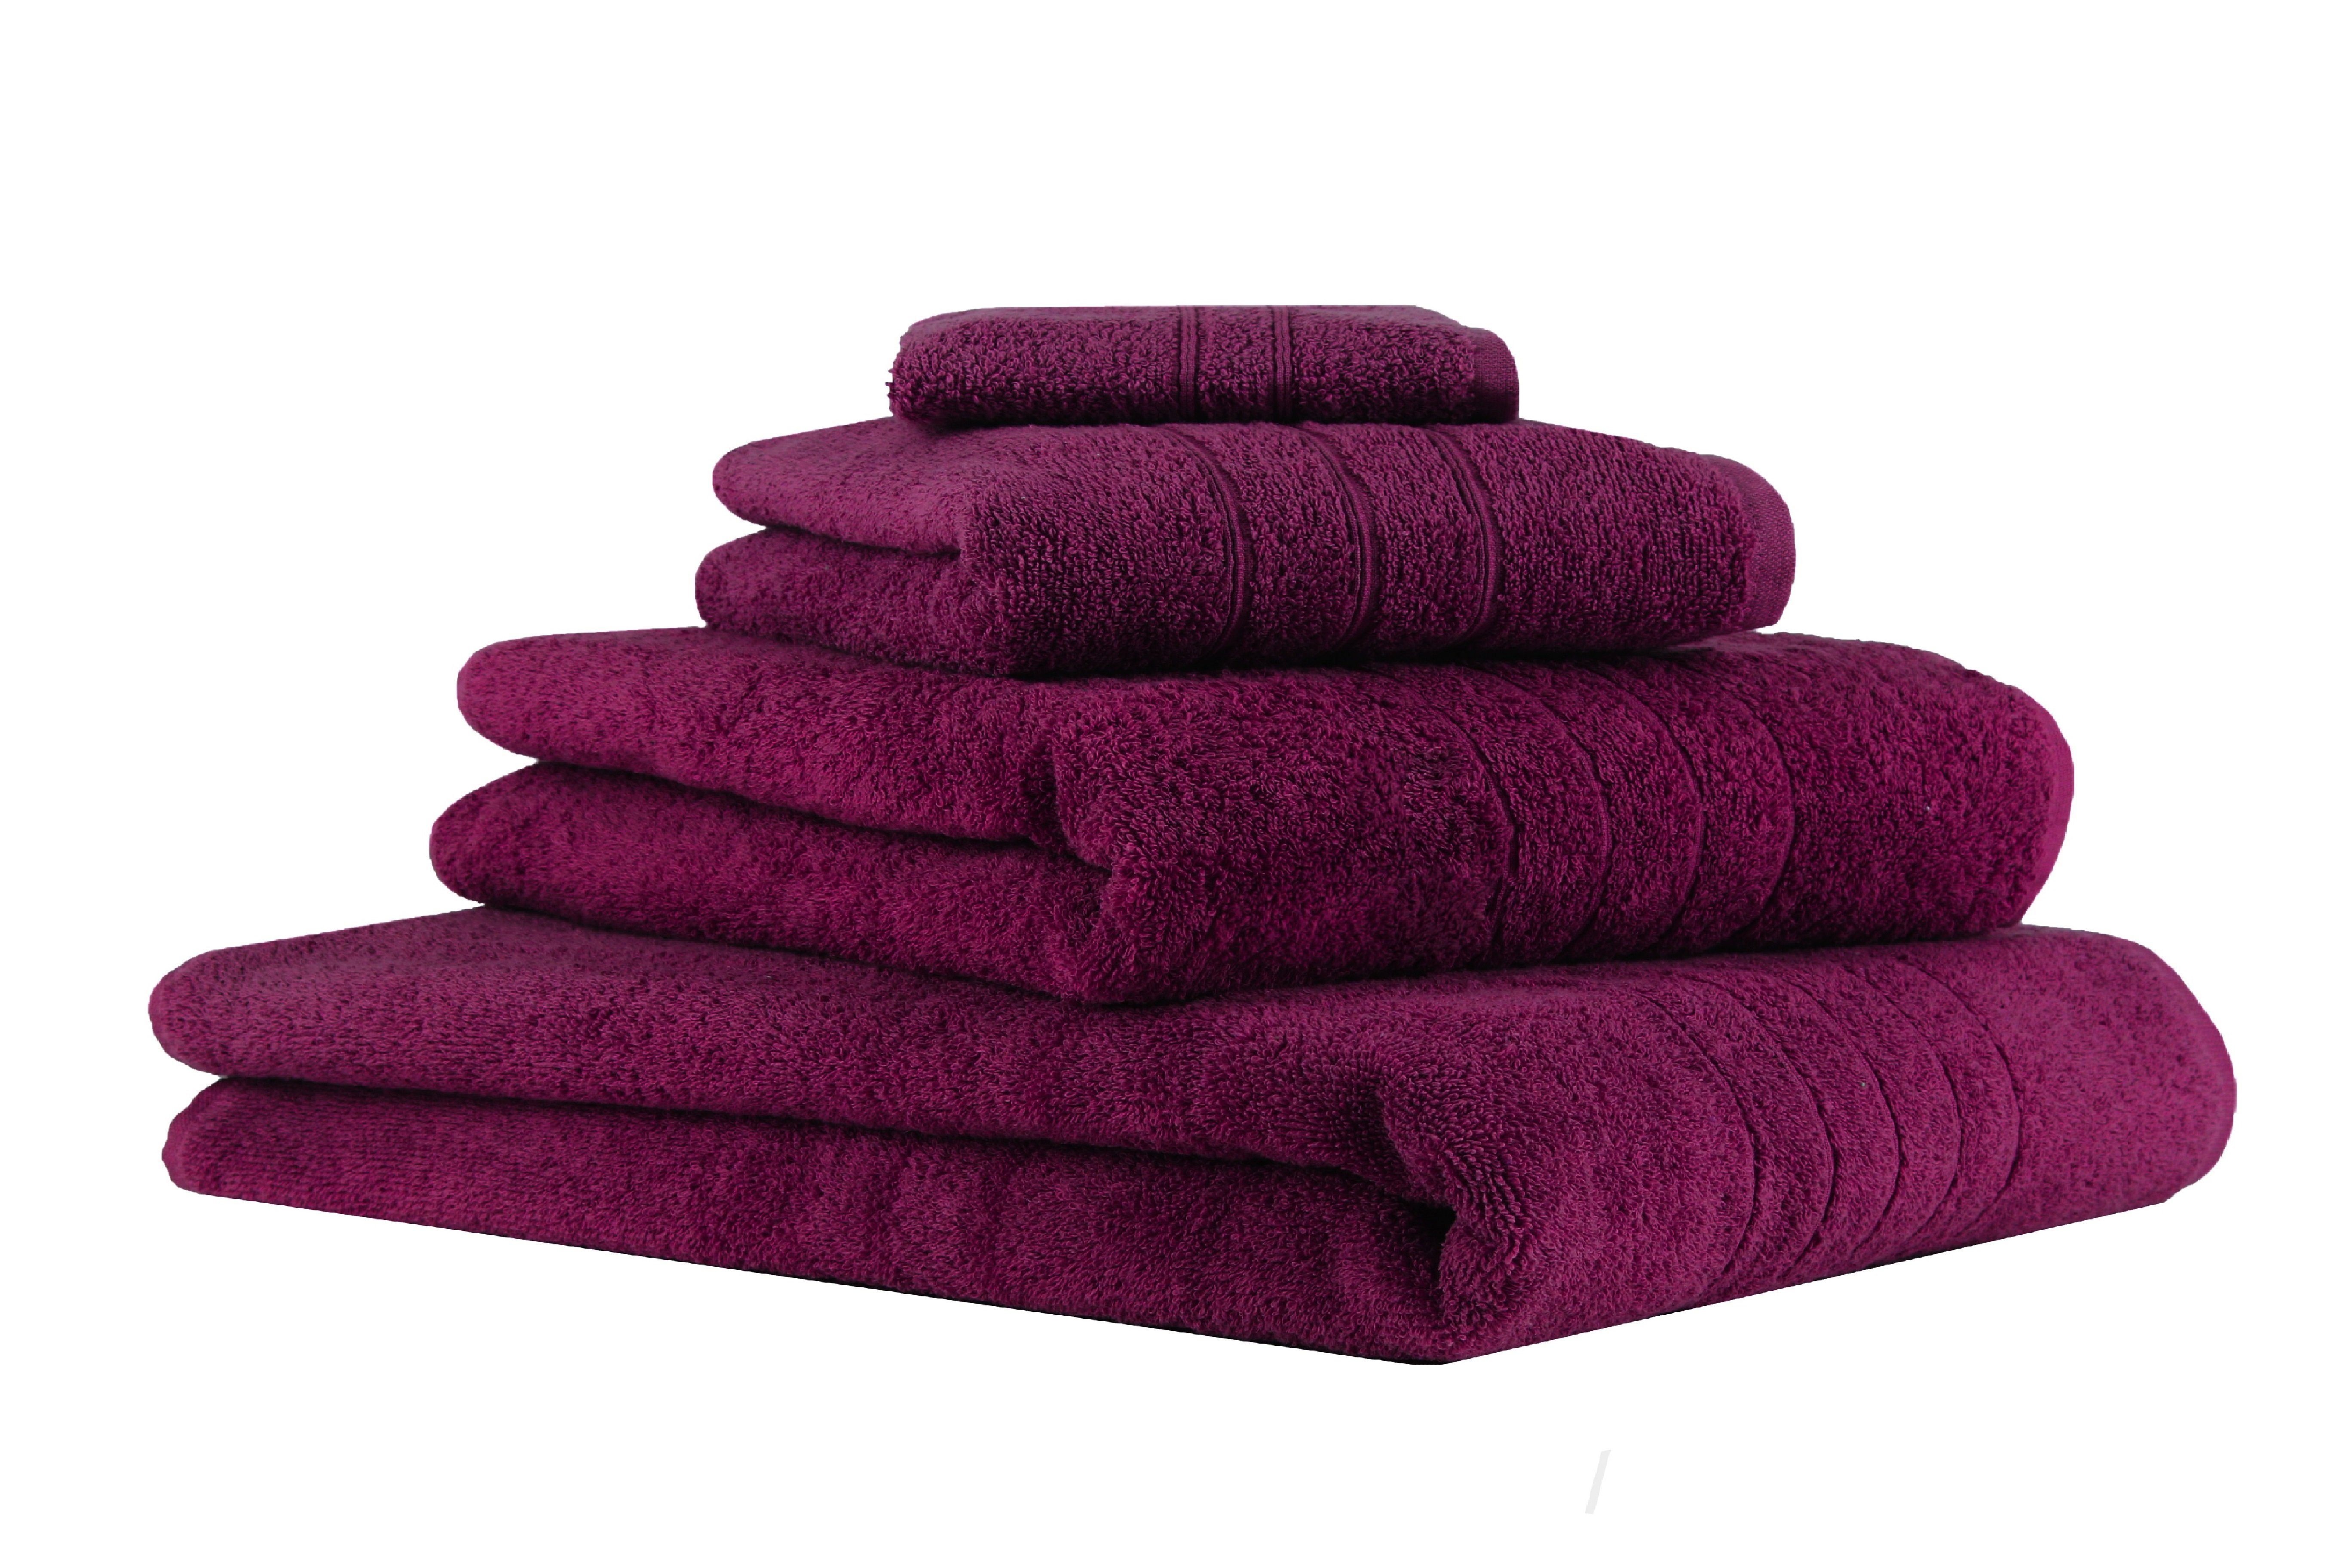 Badetuch 100% Farbe Pflaume, Baumwolle Deluxe 1 1 Handtuch Seiftuch Betz Handtuch Duschtuch 100% Set 1 (4-tlg) 1 4-TLG. Handtuch-Set Baumwolle,